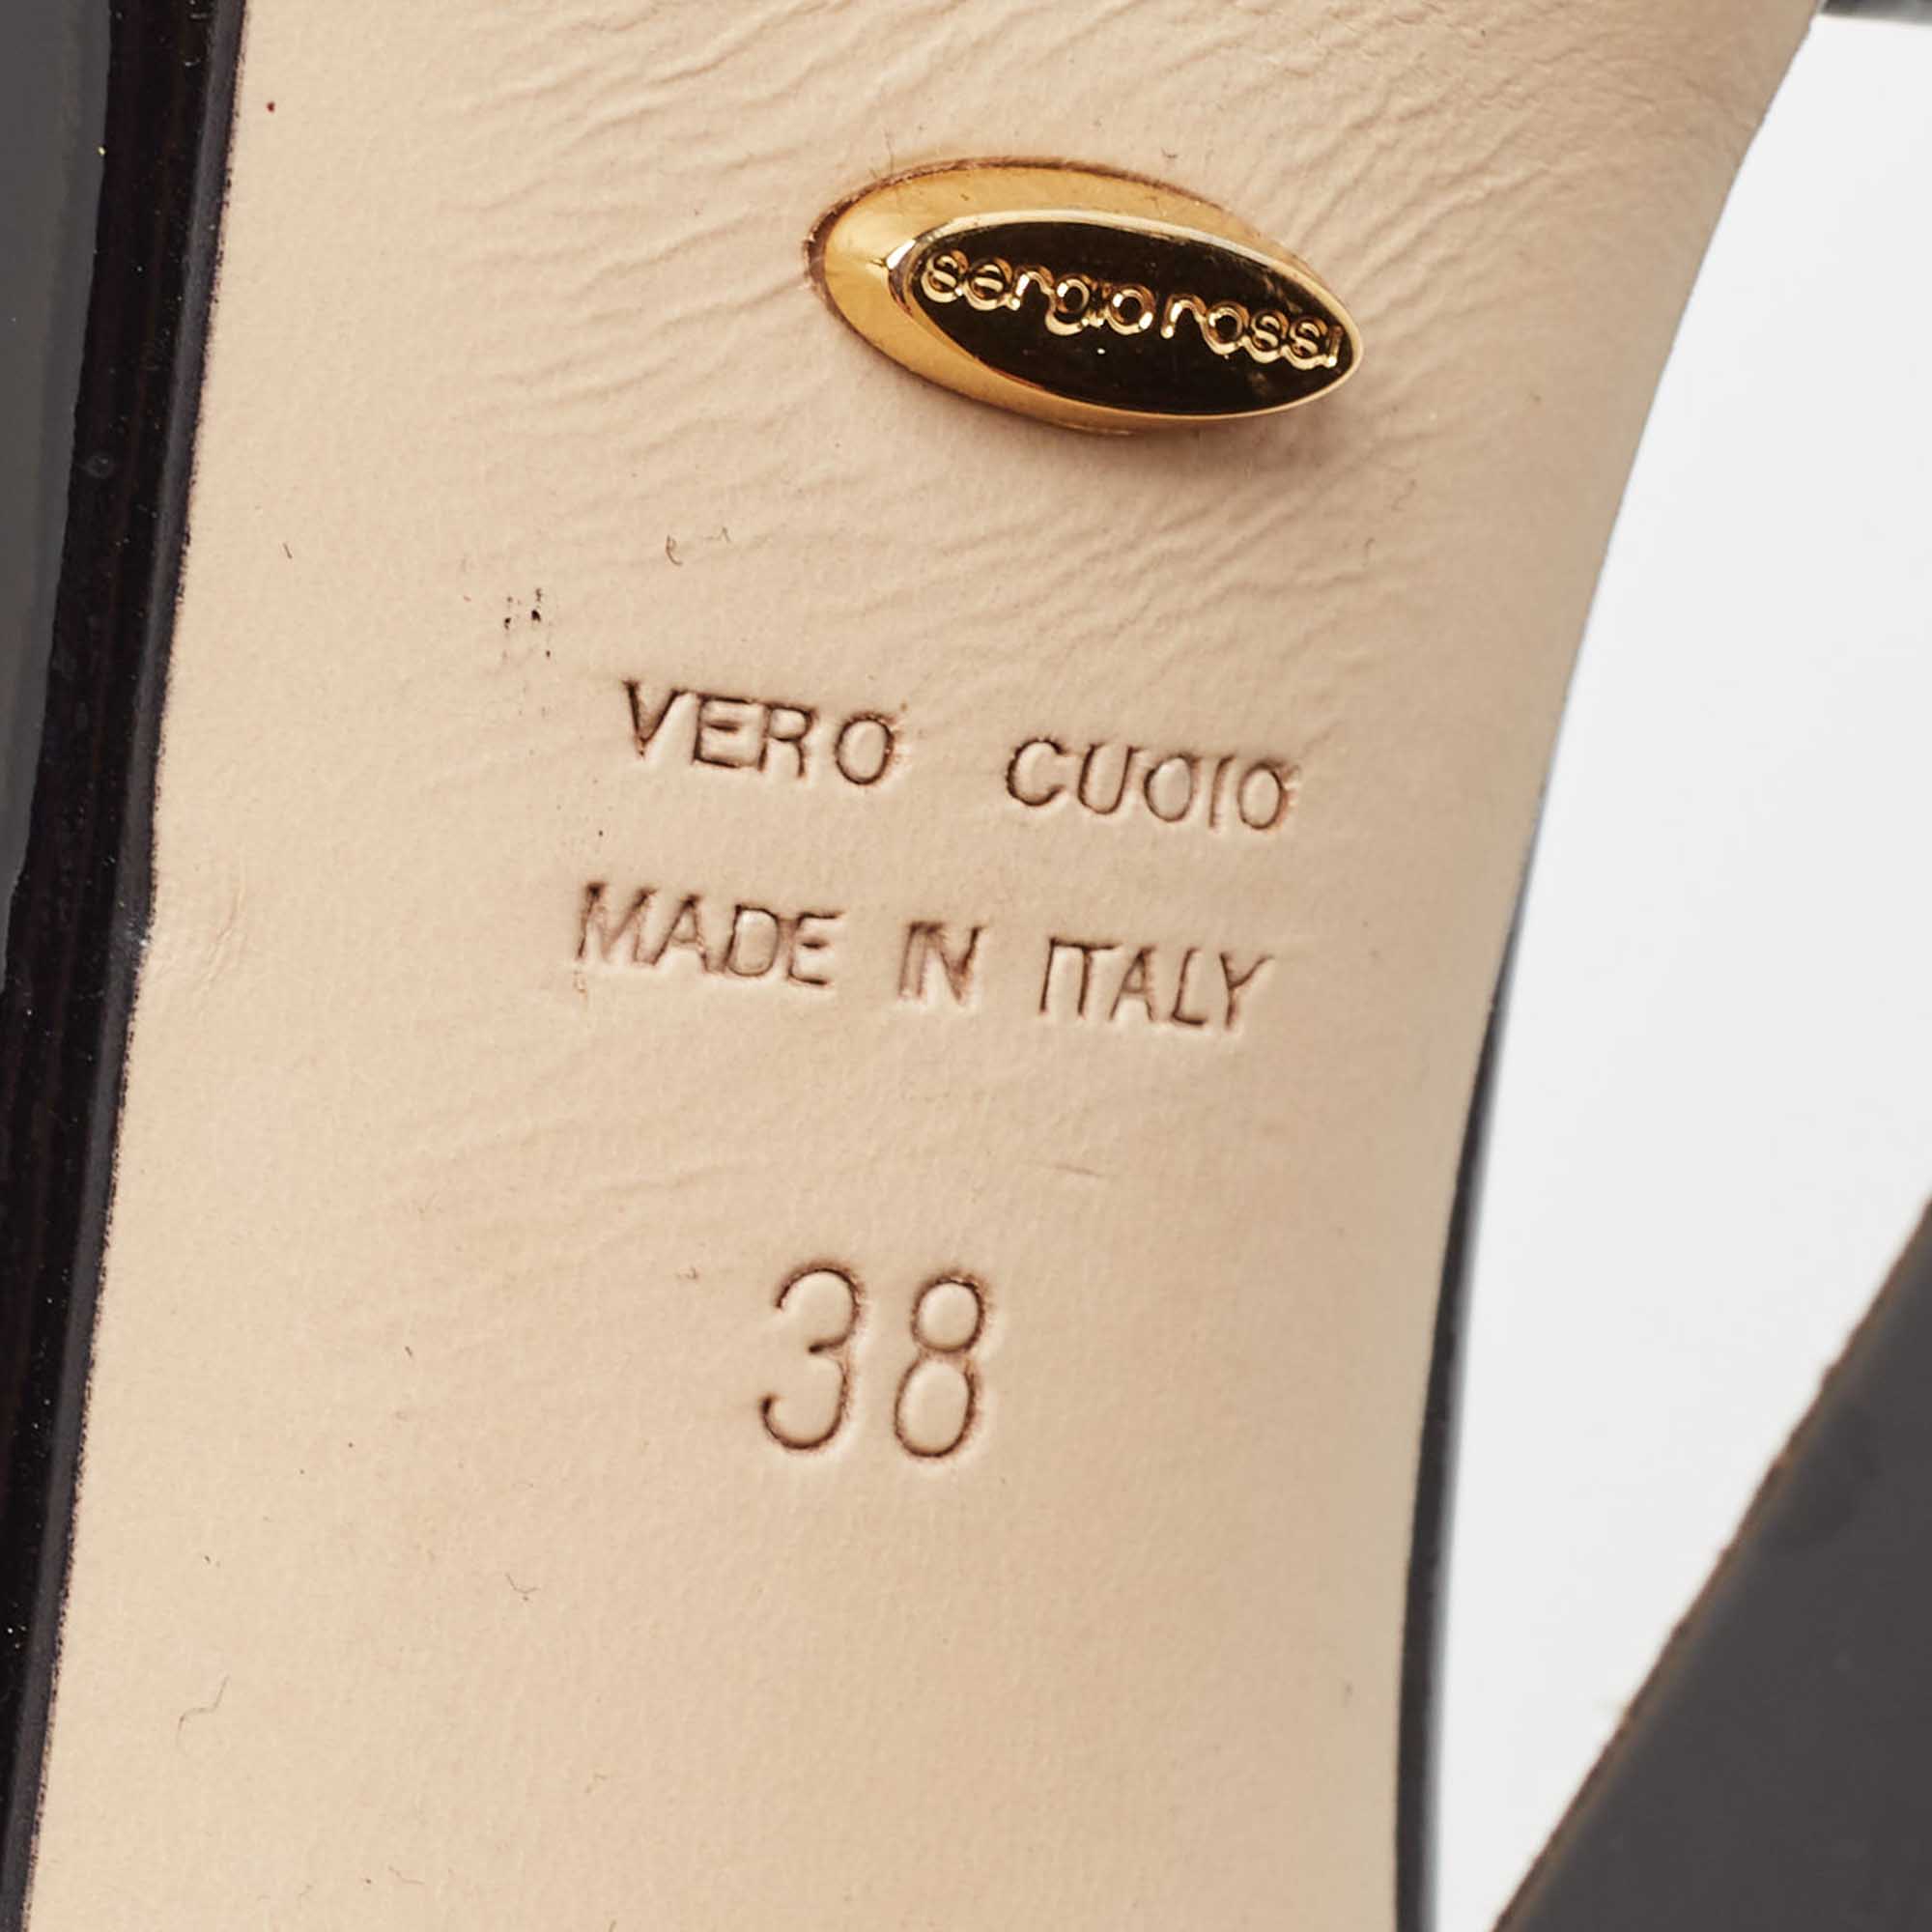 Sergio Rossi Black Patent Leather Platform Ankle Strap Pumps Size 38